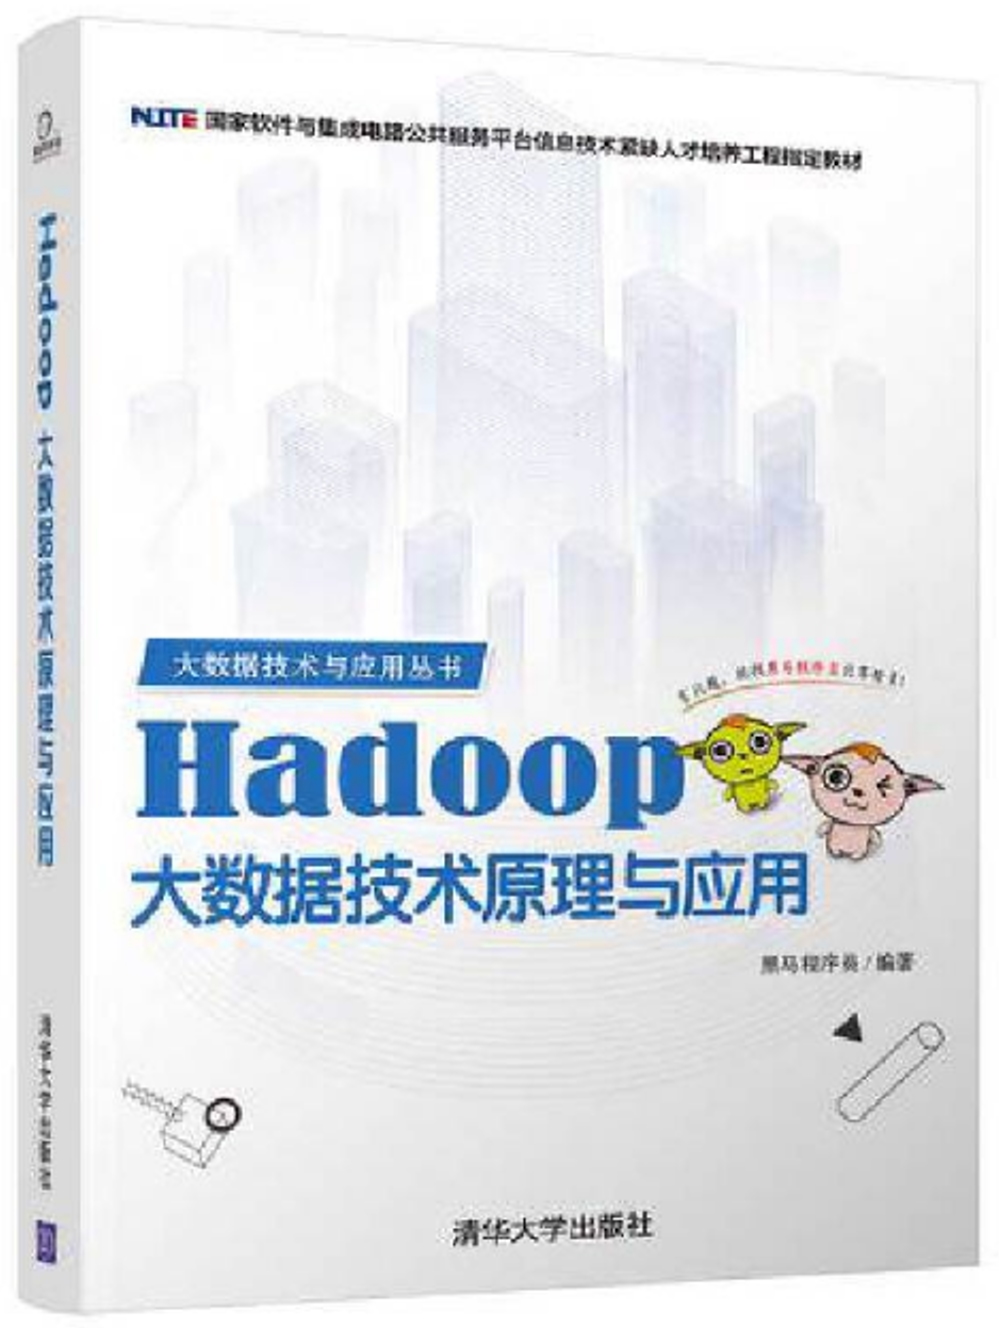 Hadoop大數據技術原理與應用